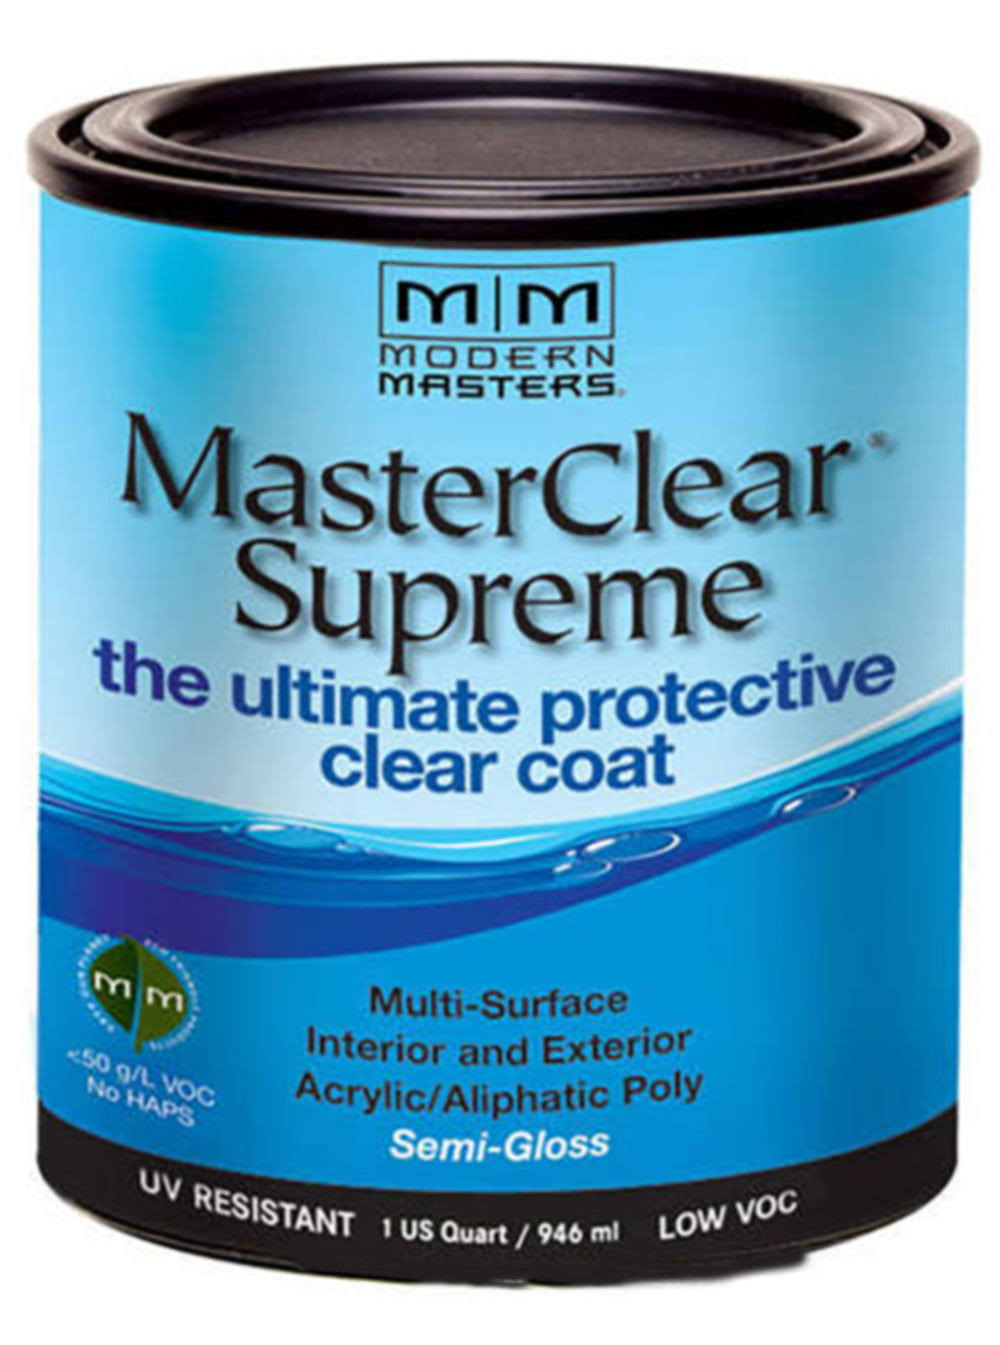 Modern Masters MasterClear Supreme Clear Coat - Semi-Gloss